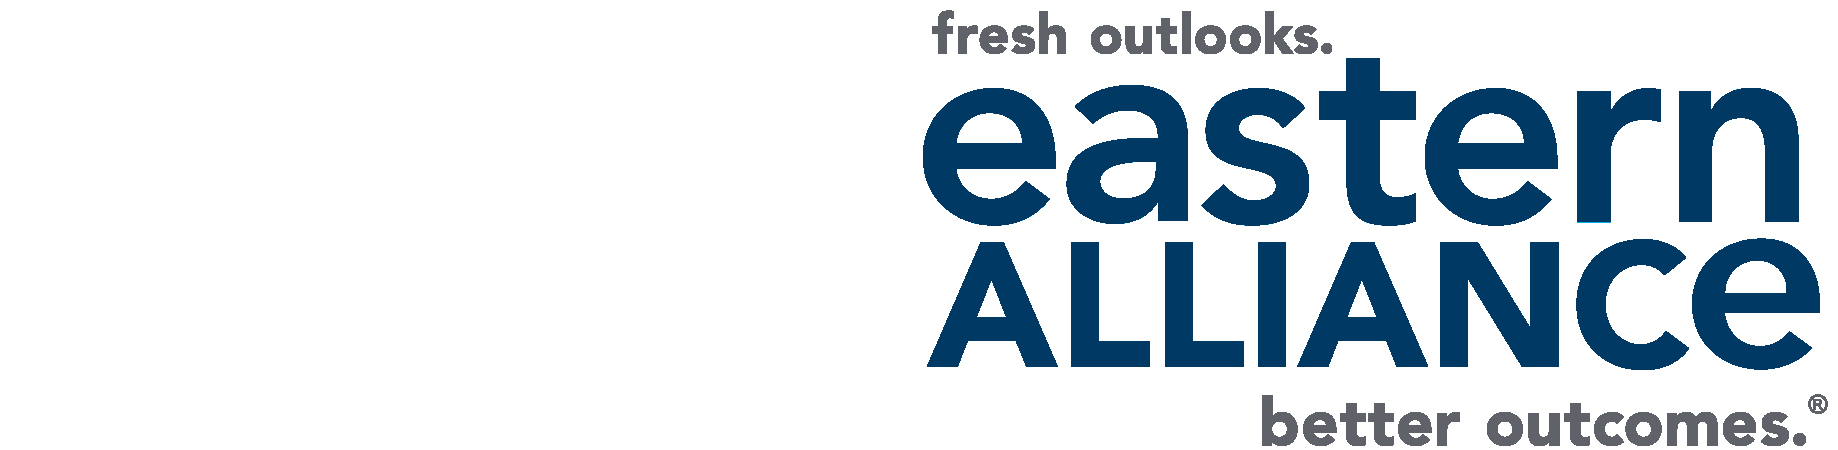 Eastern Alliance logo